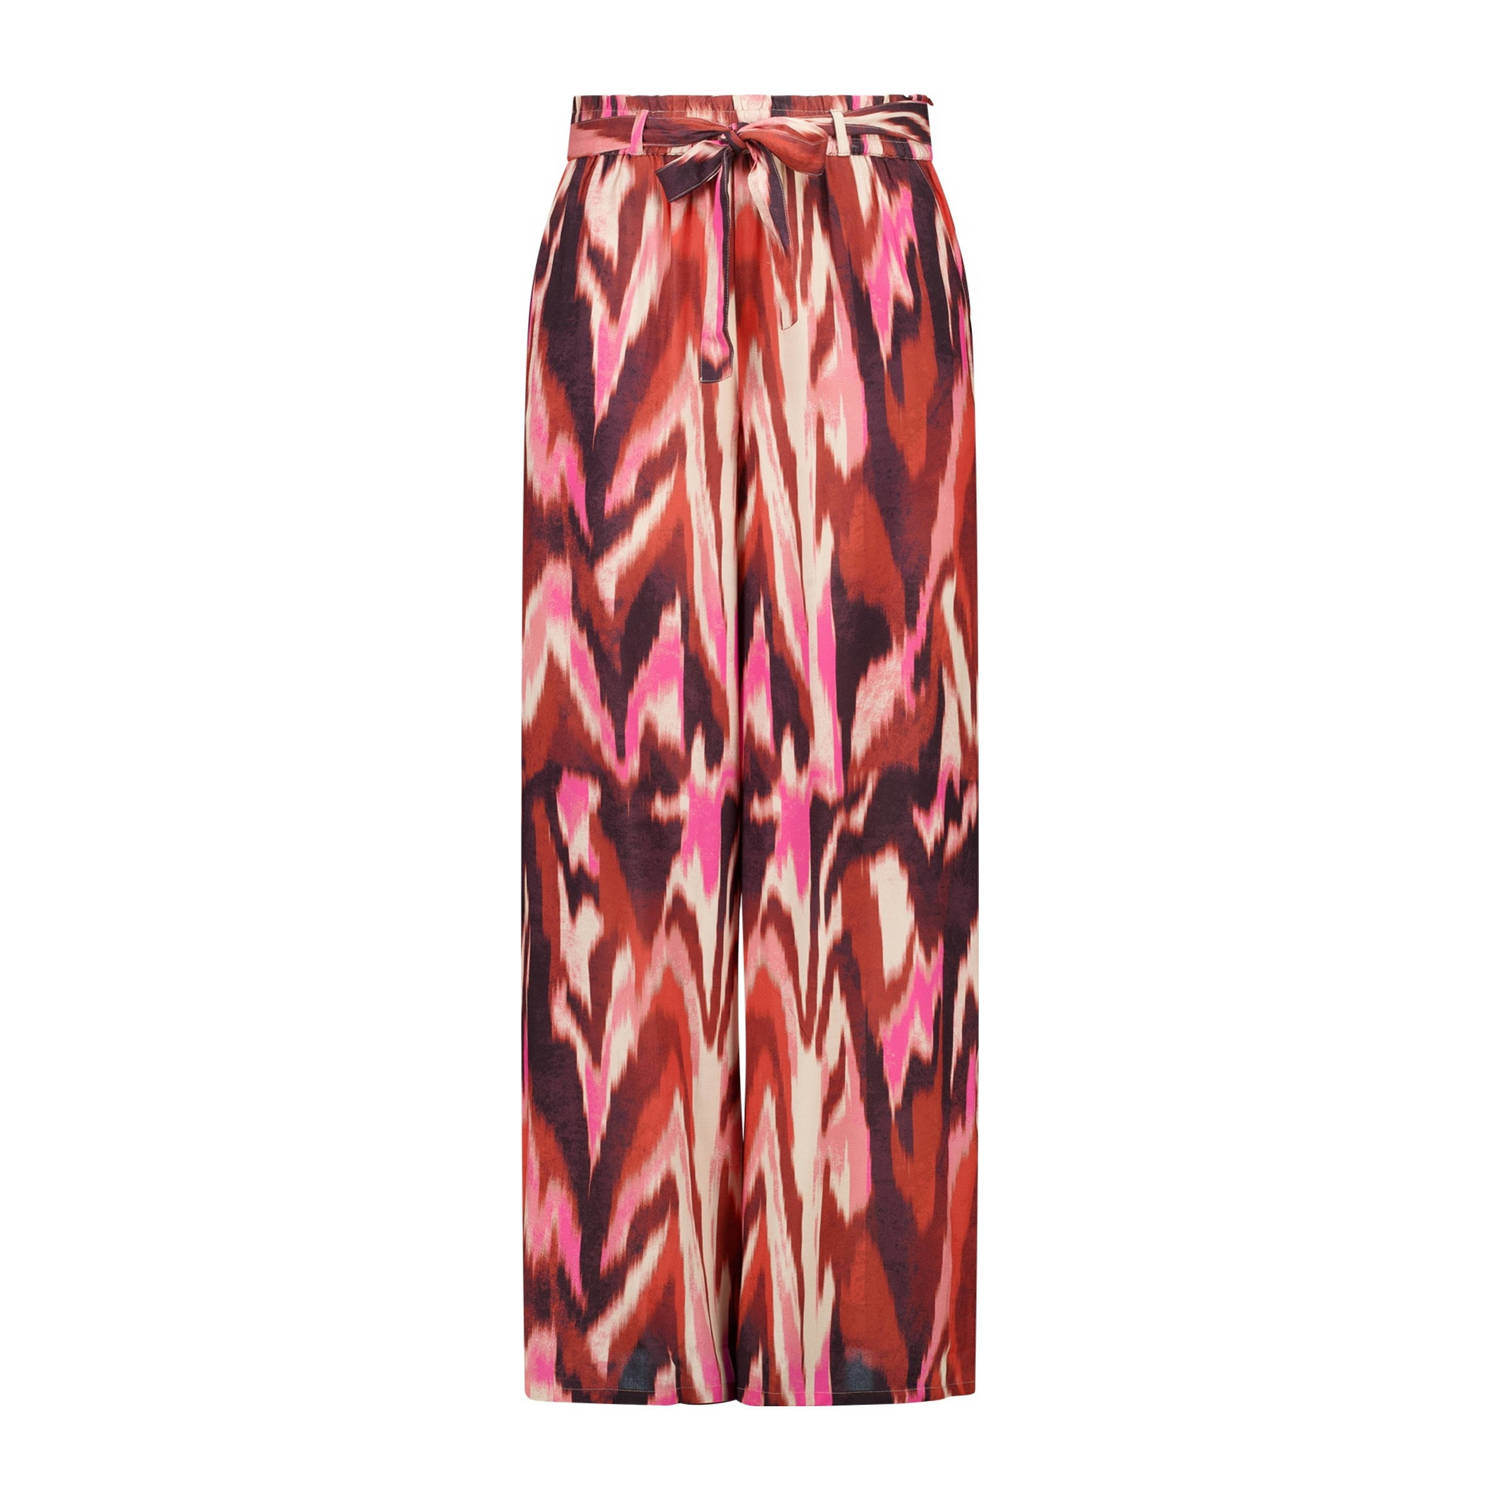 MS Mode high waist wide leg broek met all over print rood roze paars